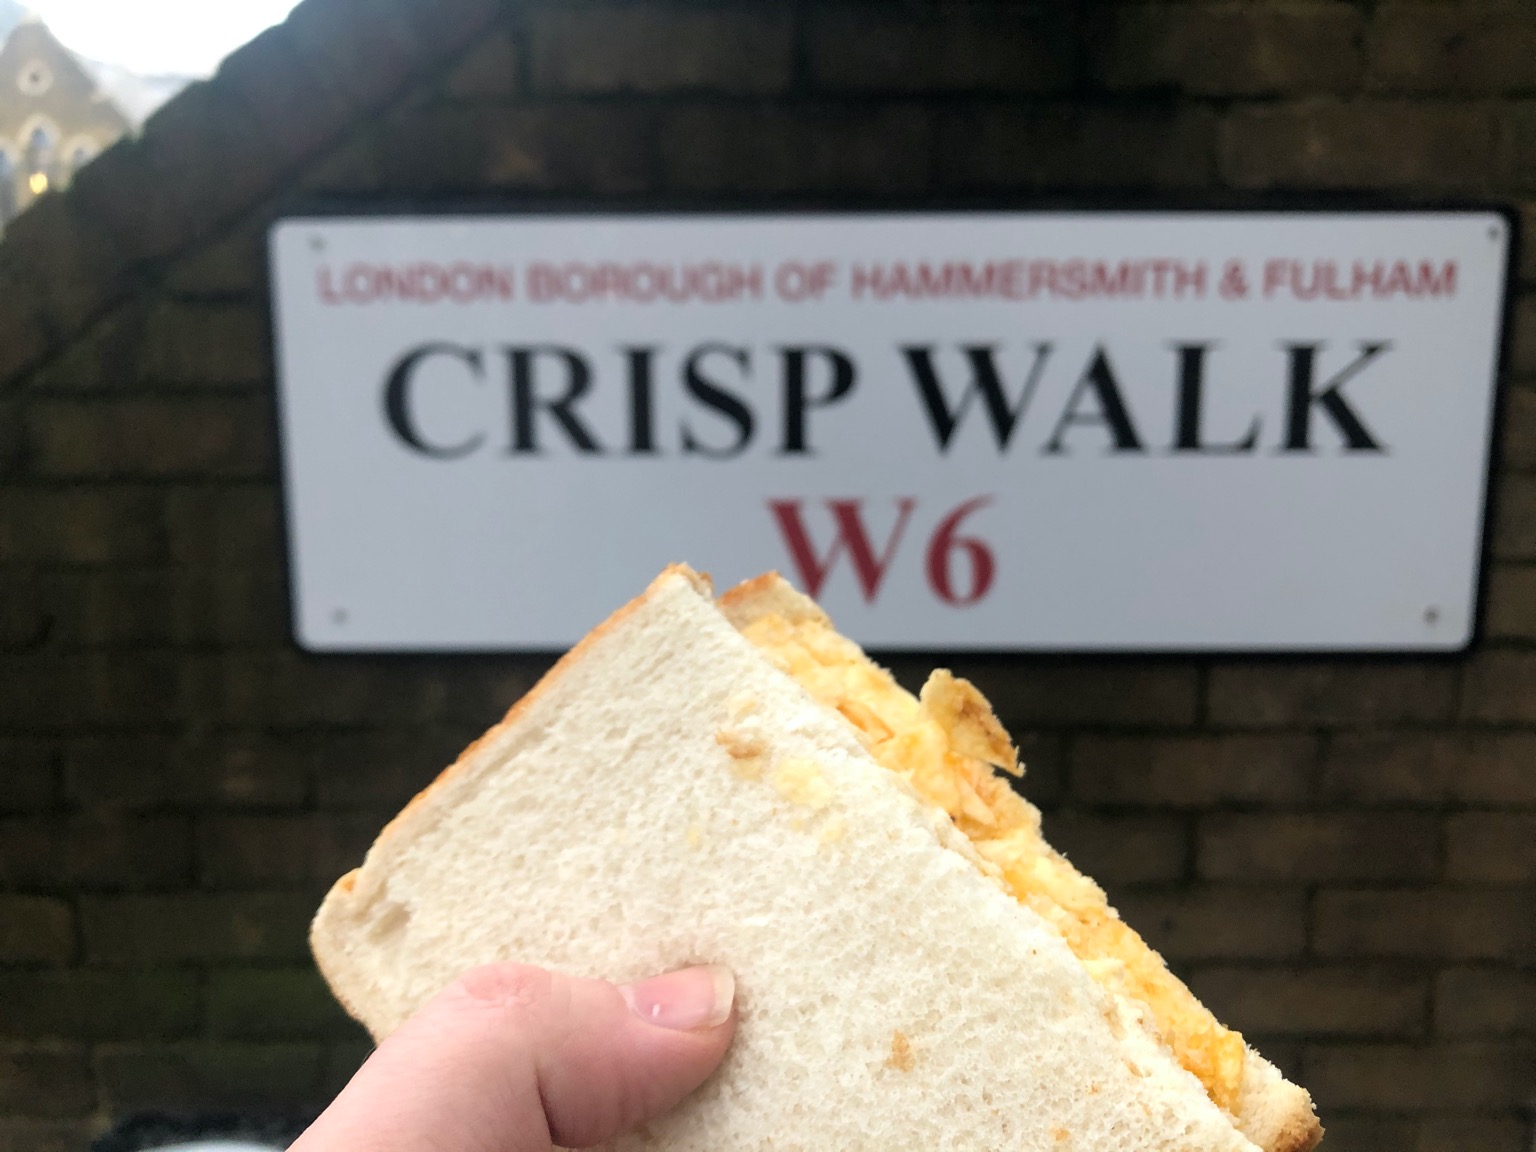 Half of a crisp sandwich held up to Crisp Walk sign